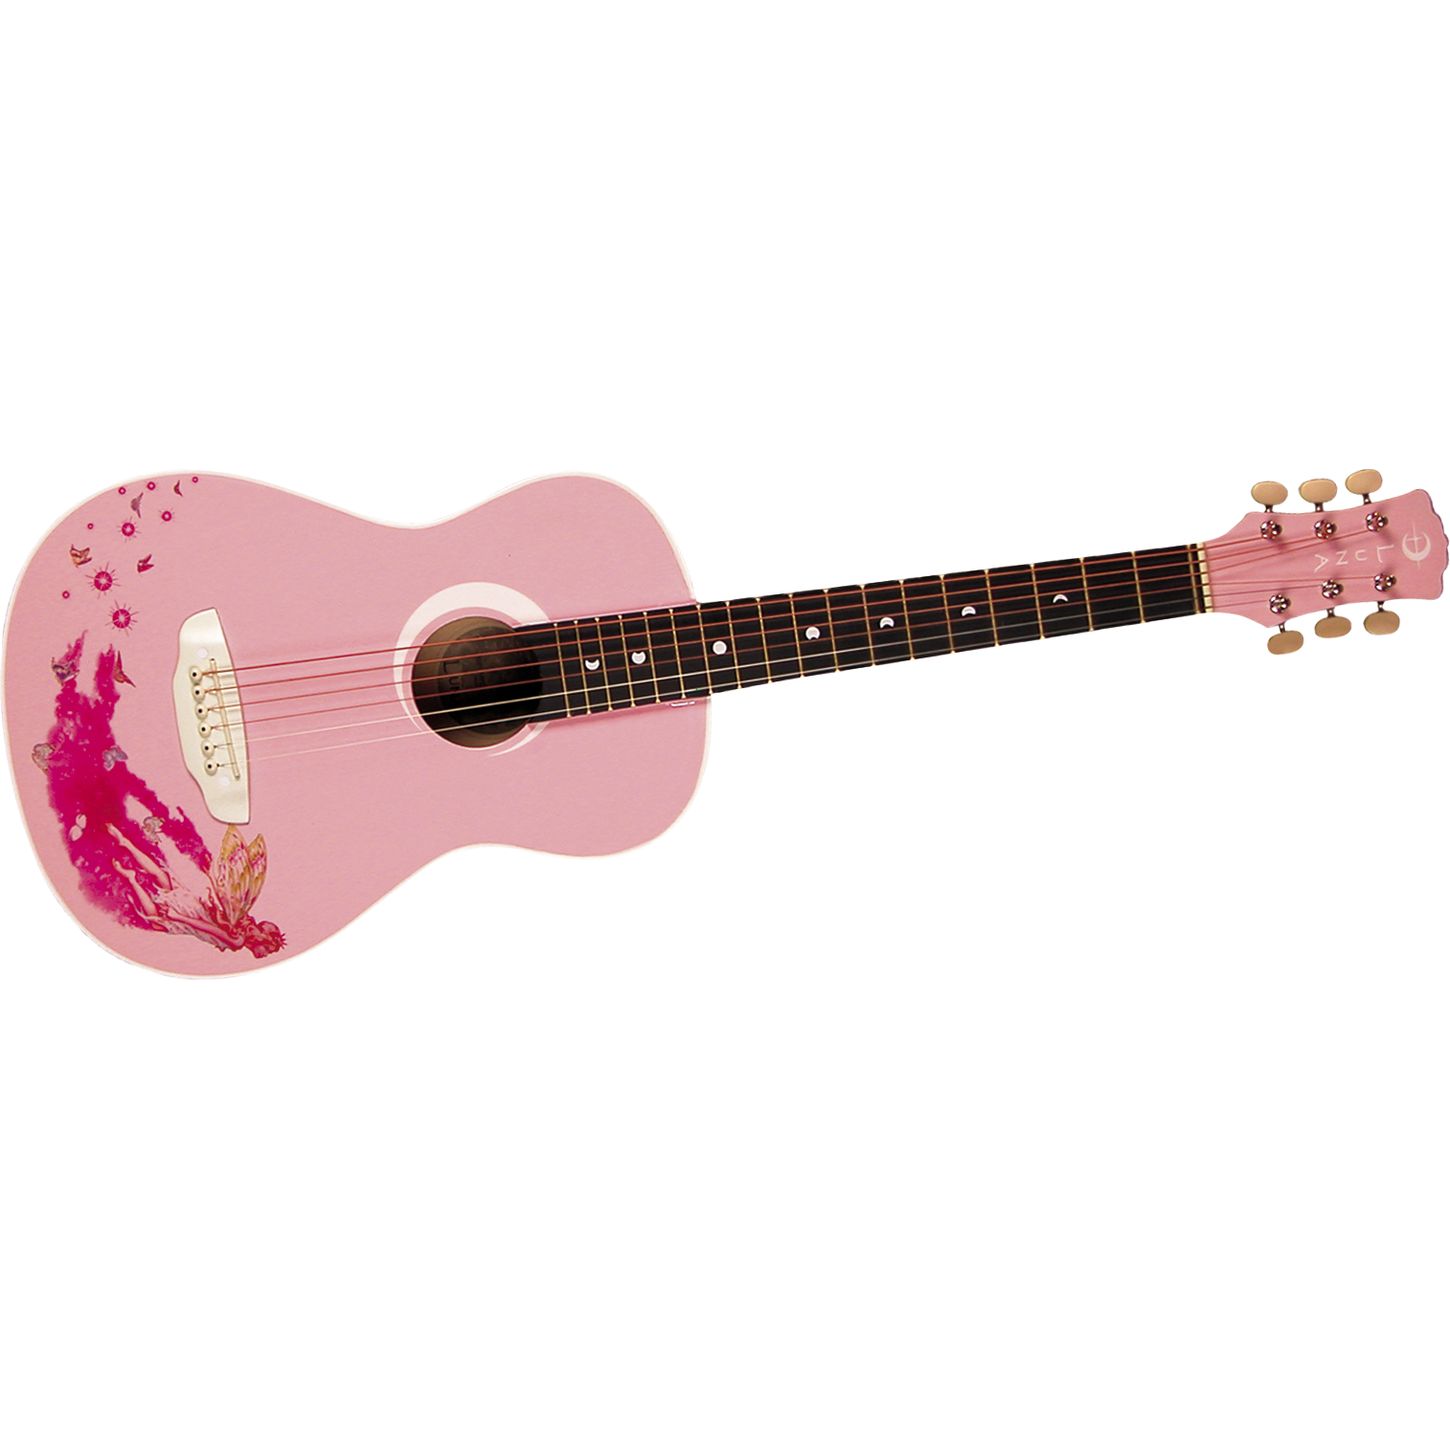 Acoustic Pink Guitar